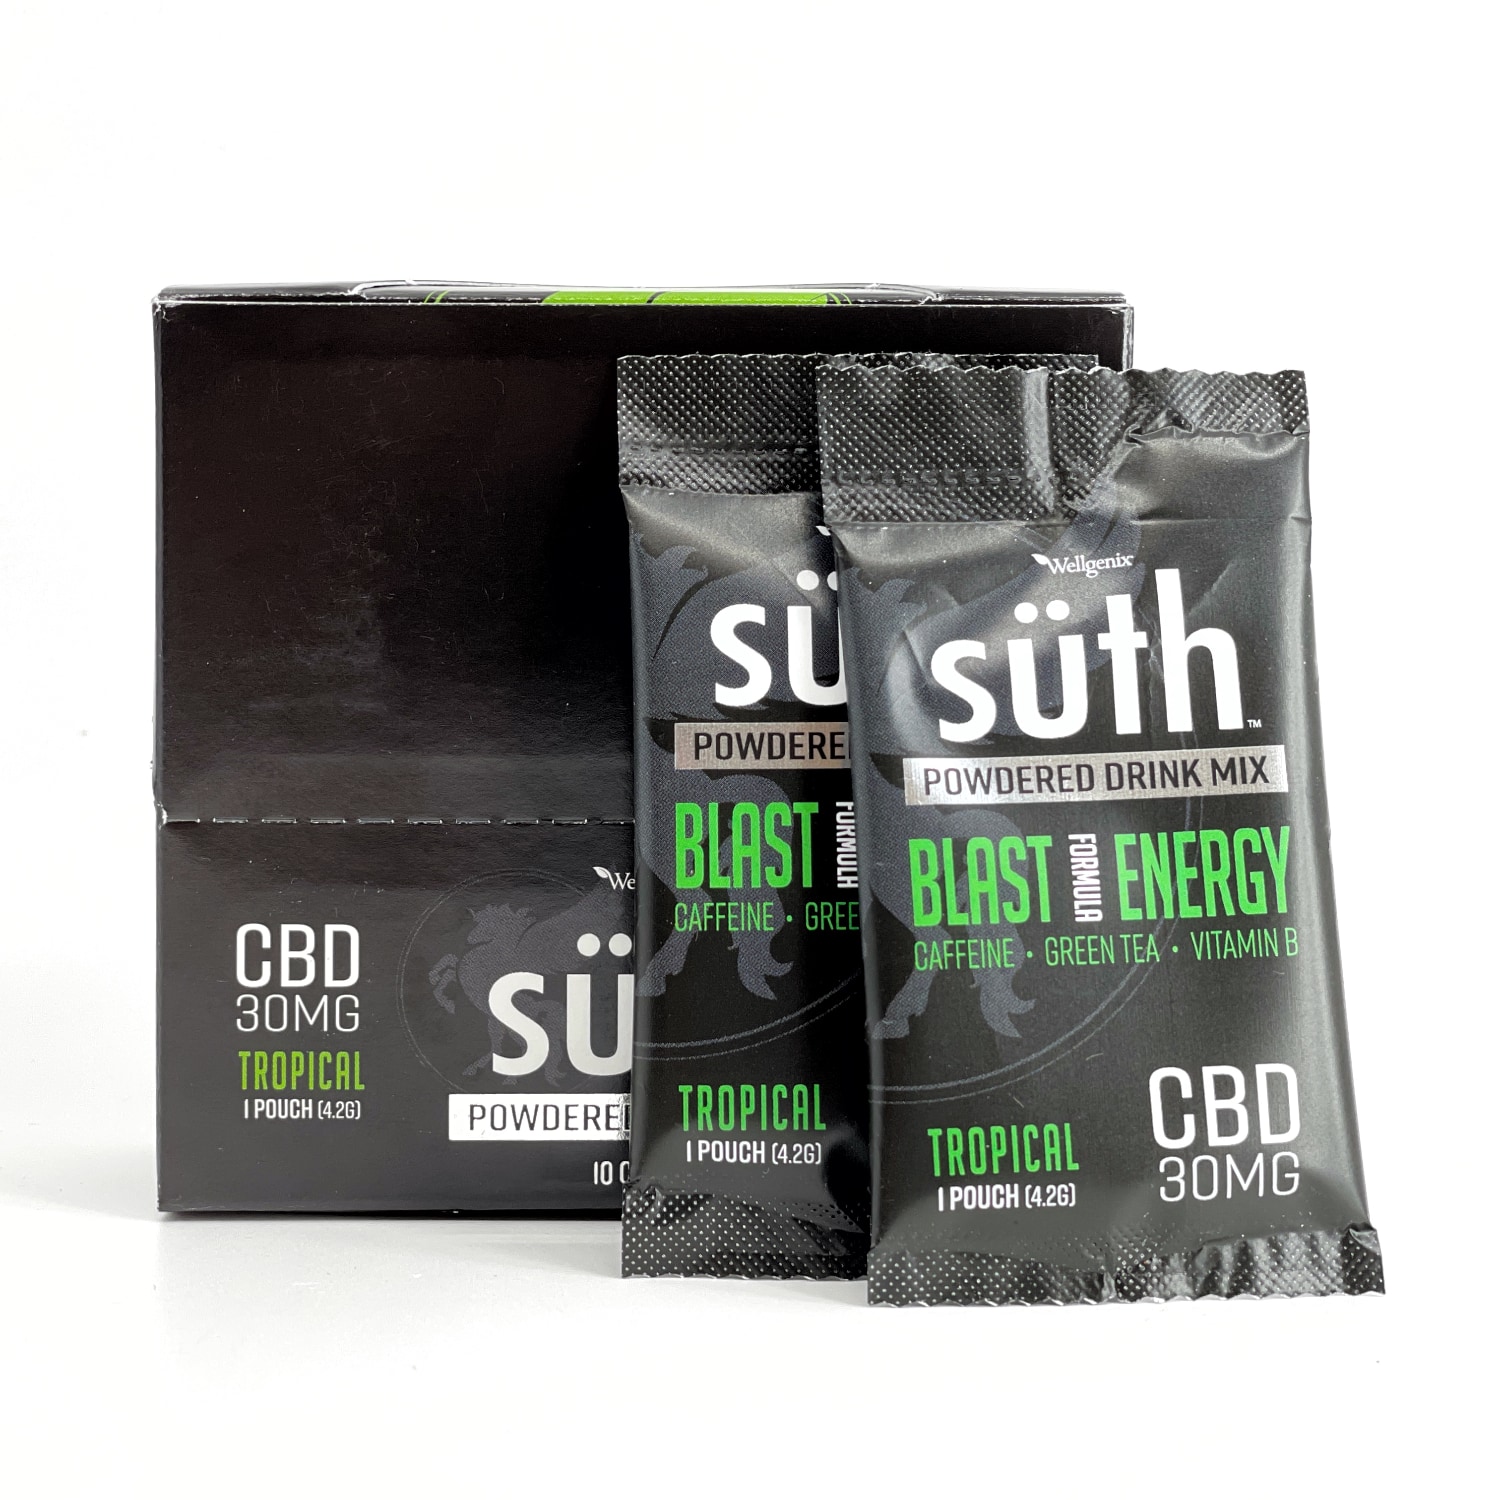 Suth, Blast Energy CBD Drink with Caffeine, Tropical, Full Spectrum, 10ct, 300mg CBD